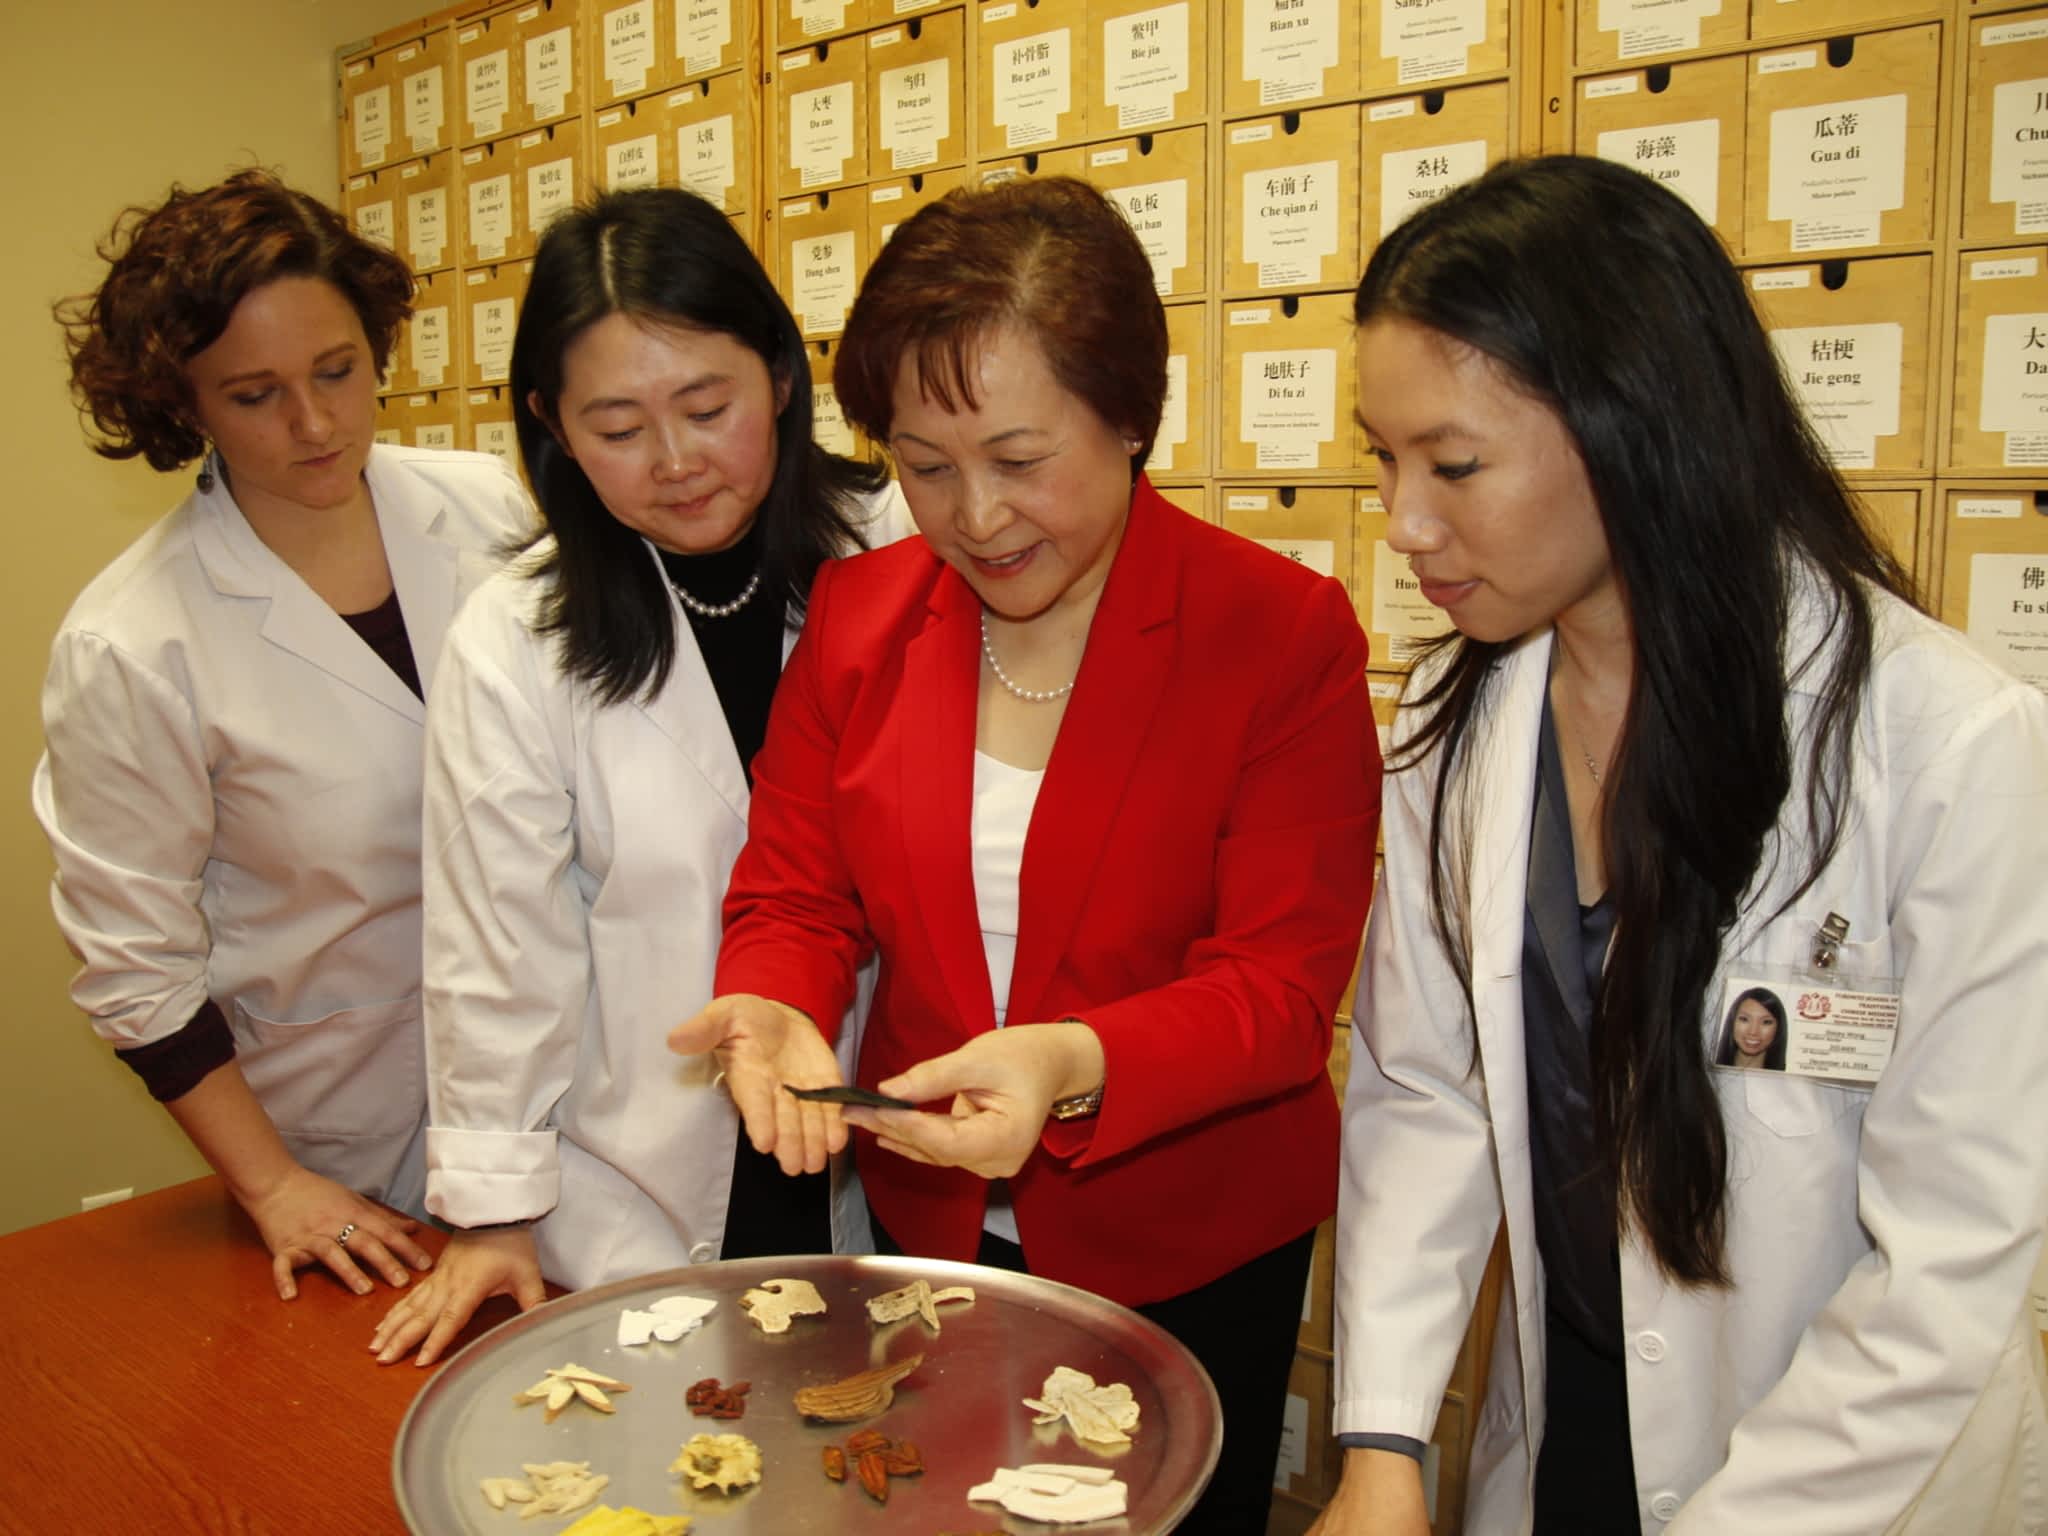 photo Toronto School of Traditional Chinese Medicine